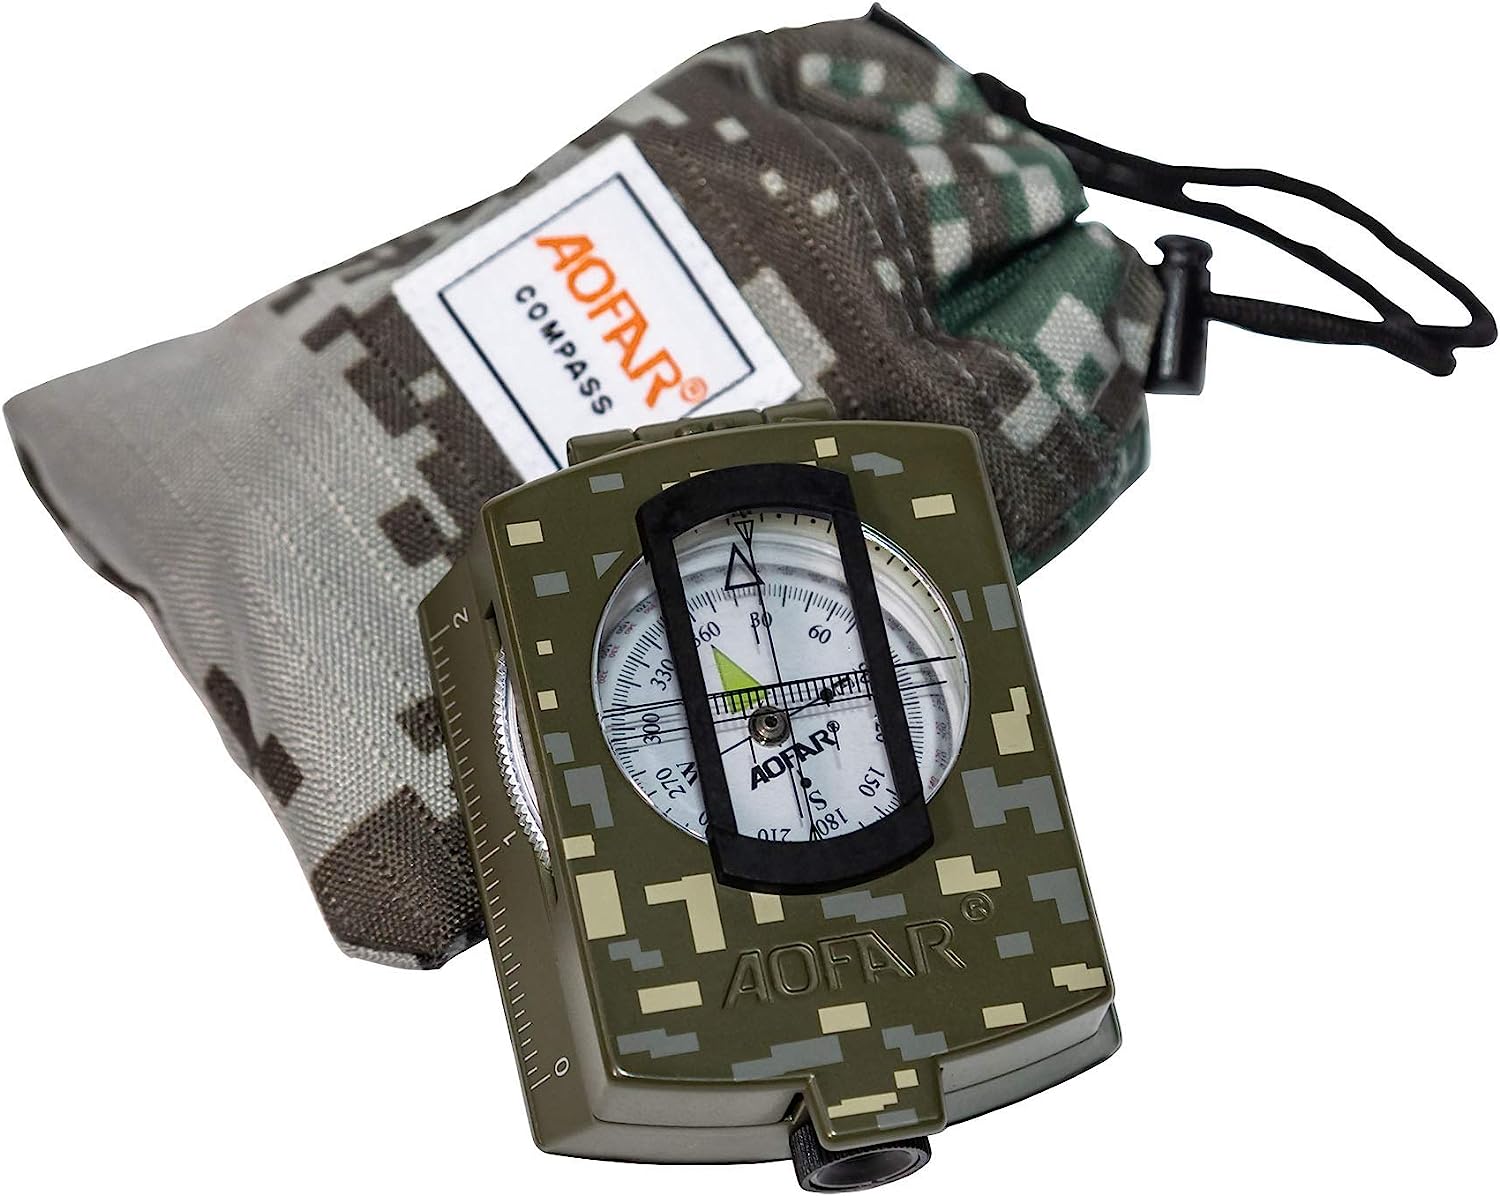 AOFAR Military Compass,AF-4580 Lensatic Sighting, [...]